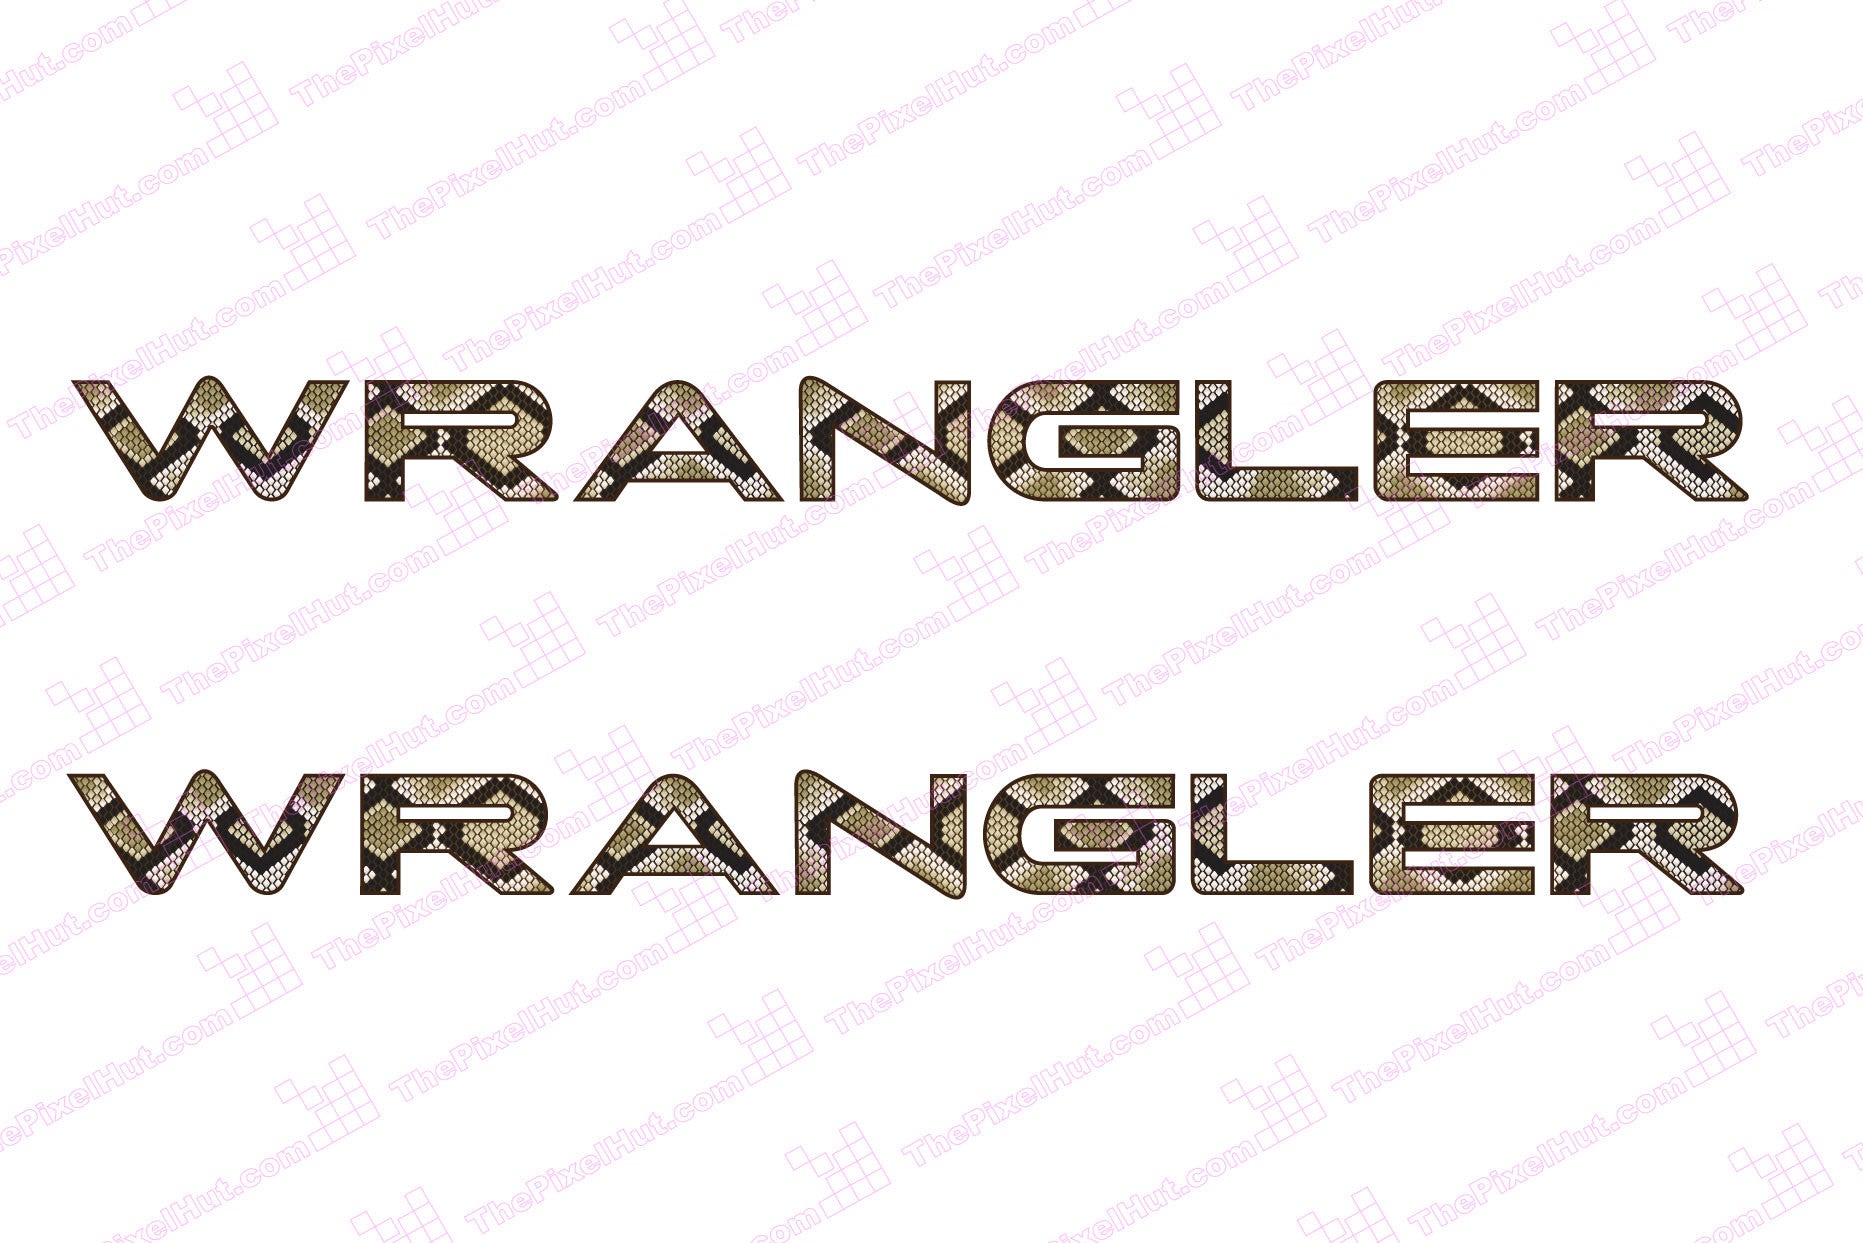 Jeep Wrangler Rattle Snake Skin Hood Decals for Wrangler TJ | The Pixel Hut